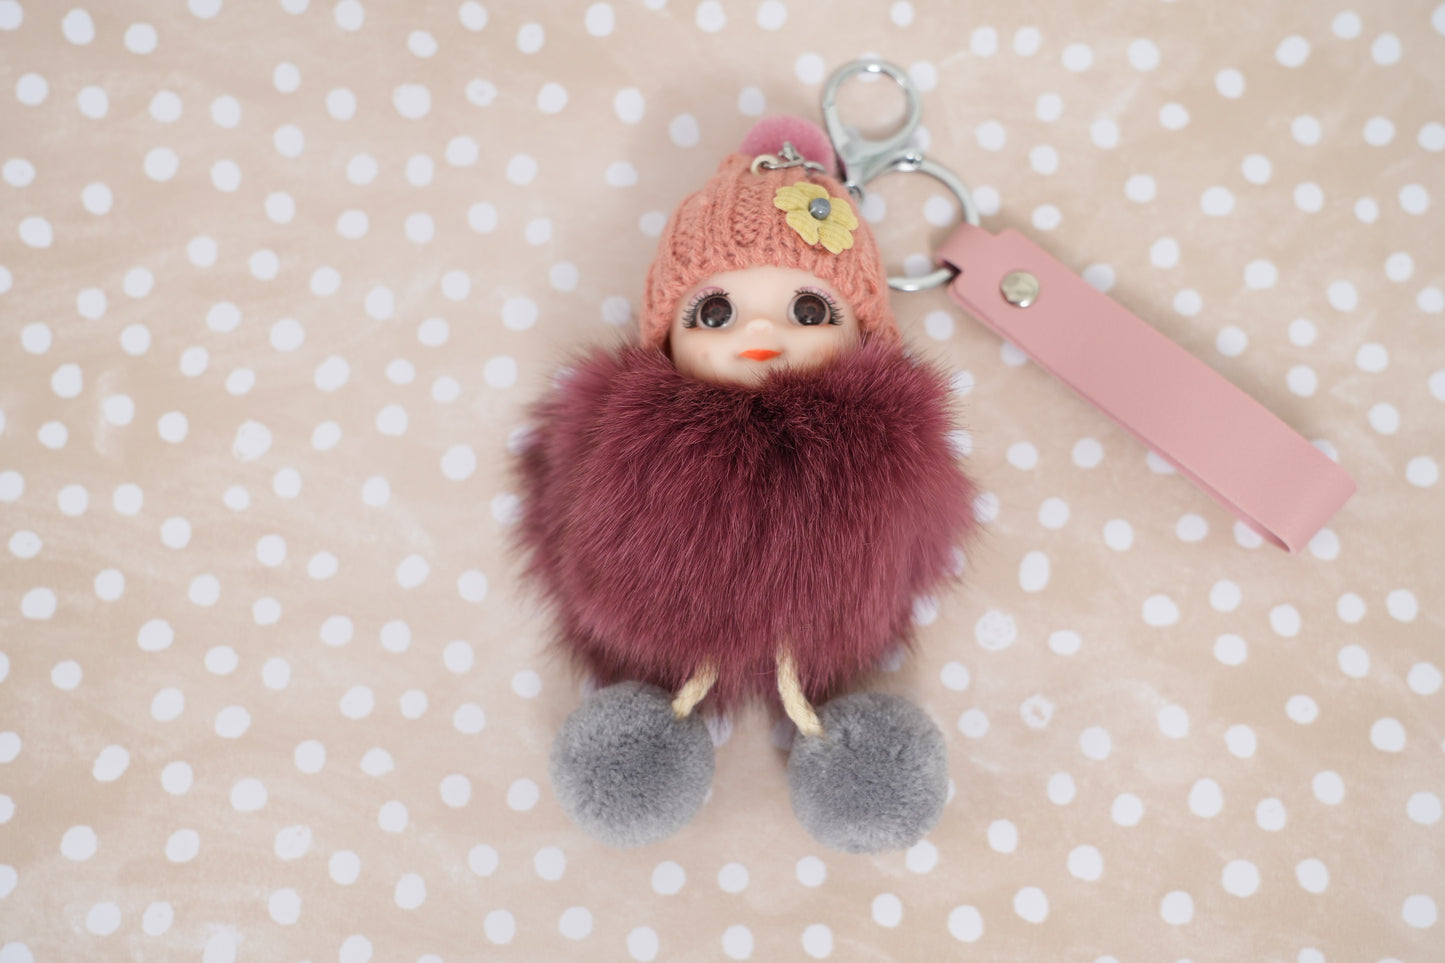 Cute Plush Smiling Baby doll Keychain